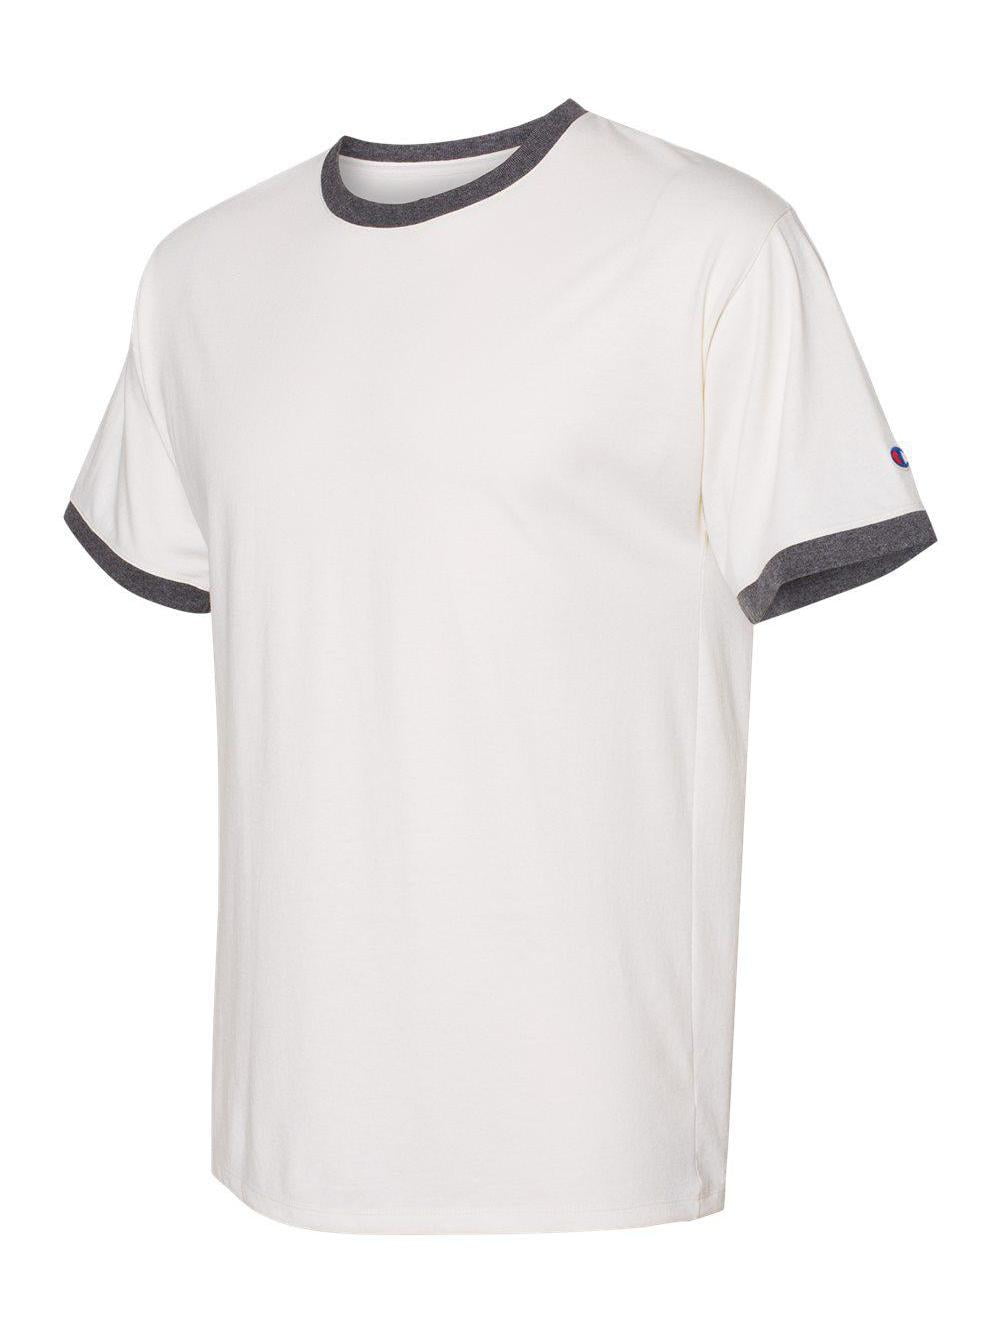 Champion Premium Fashion Ringer T Shirt Mens Short Sleeve Tee Adult New CP65 